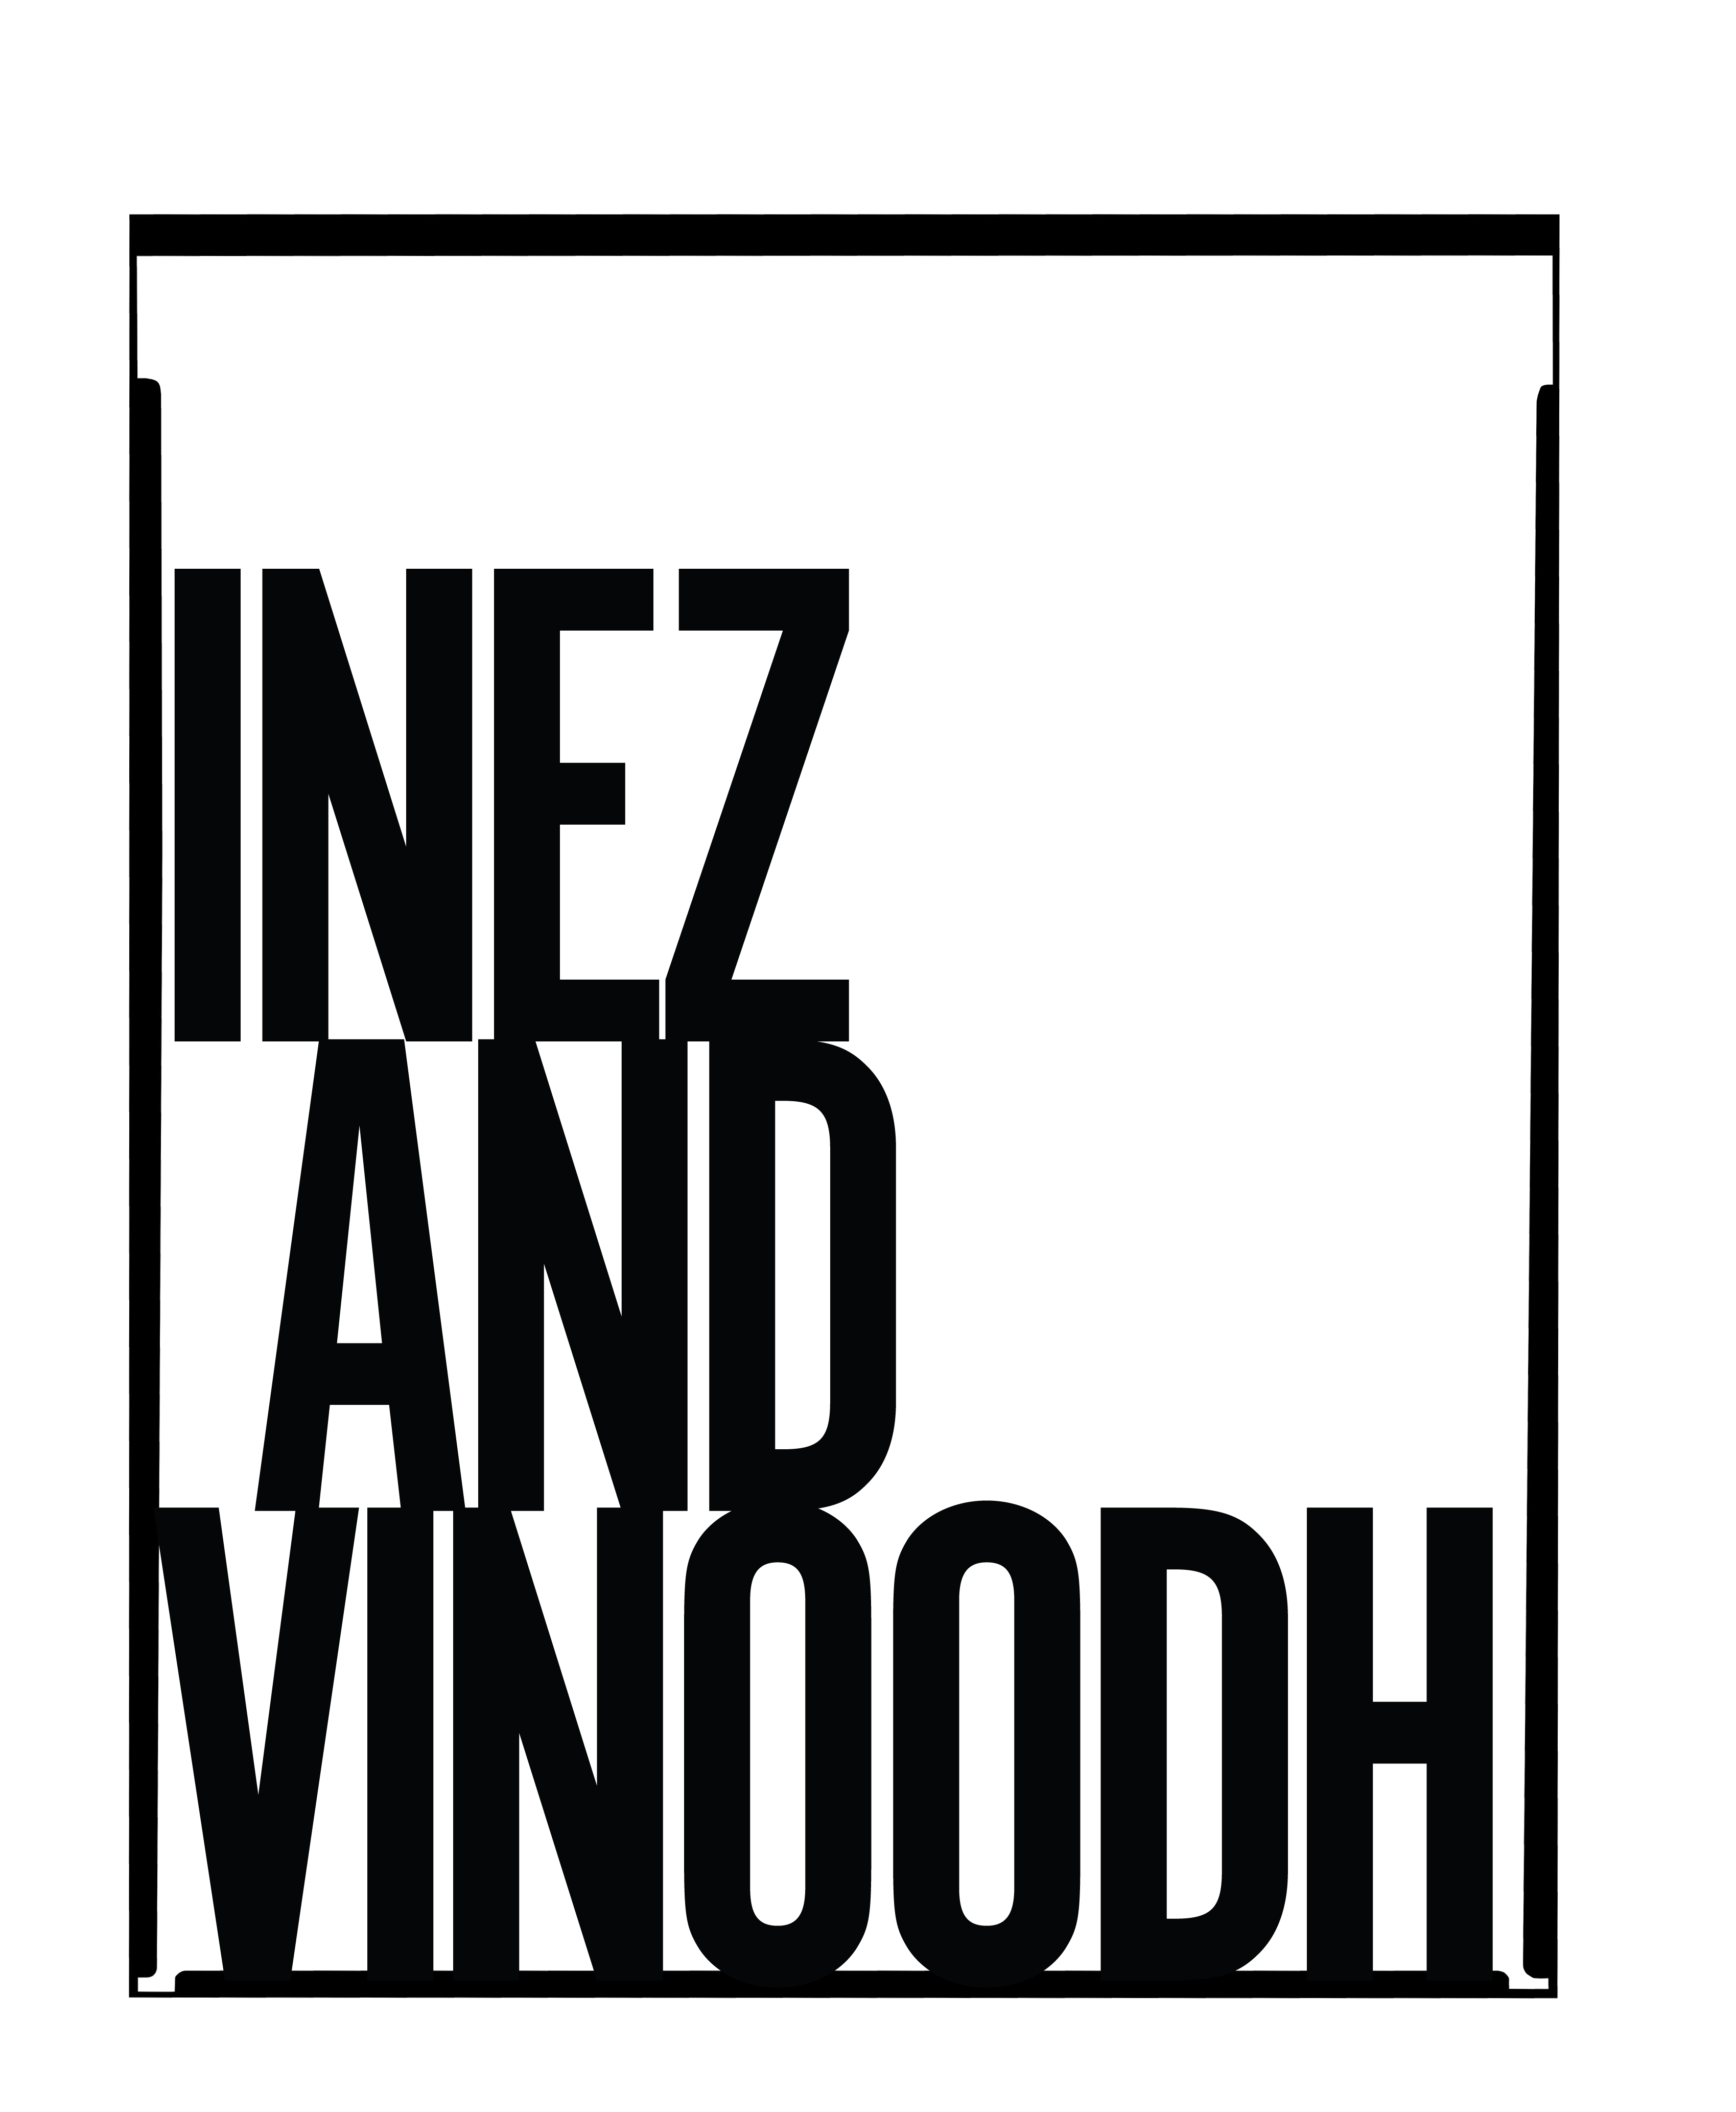 inez_vinoodh_logo2